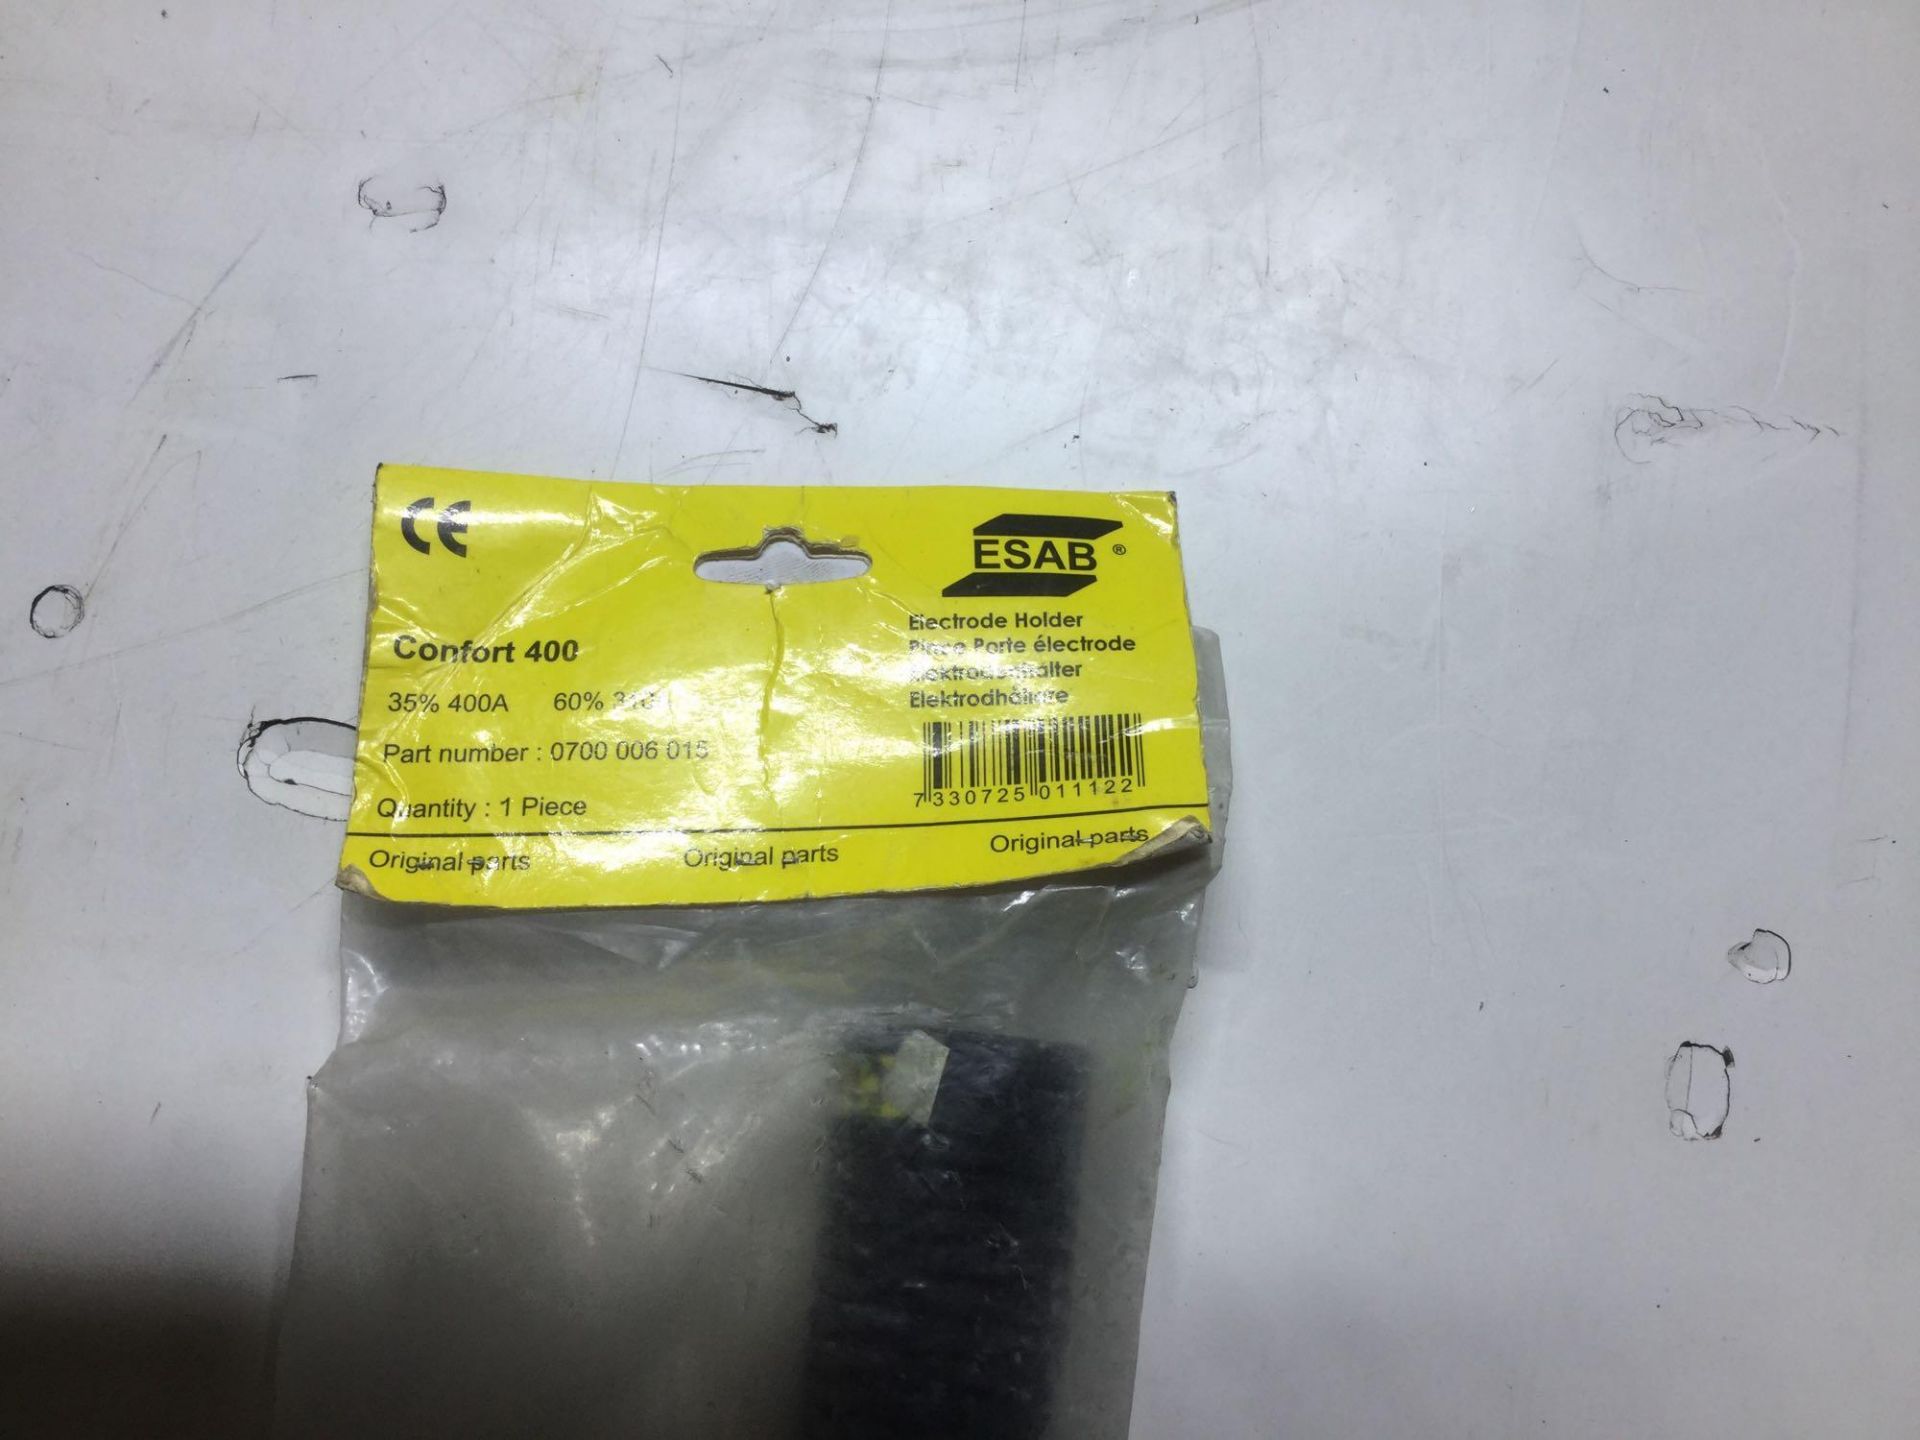 Esab electrode holder confort 400 - Bild 2 aus 2